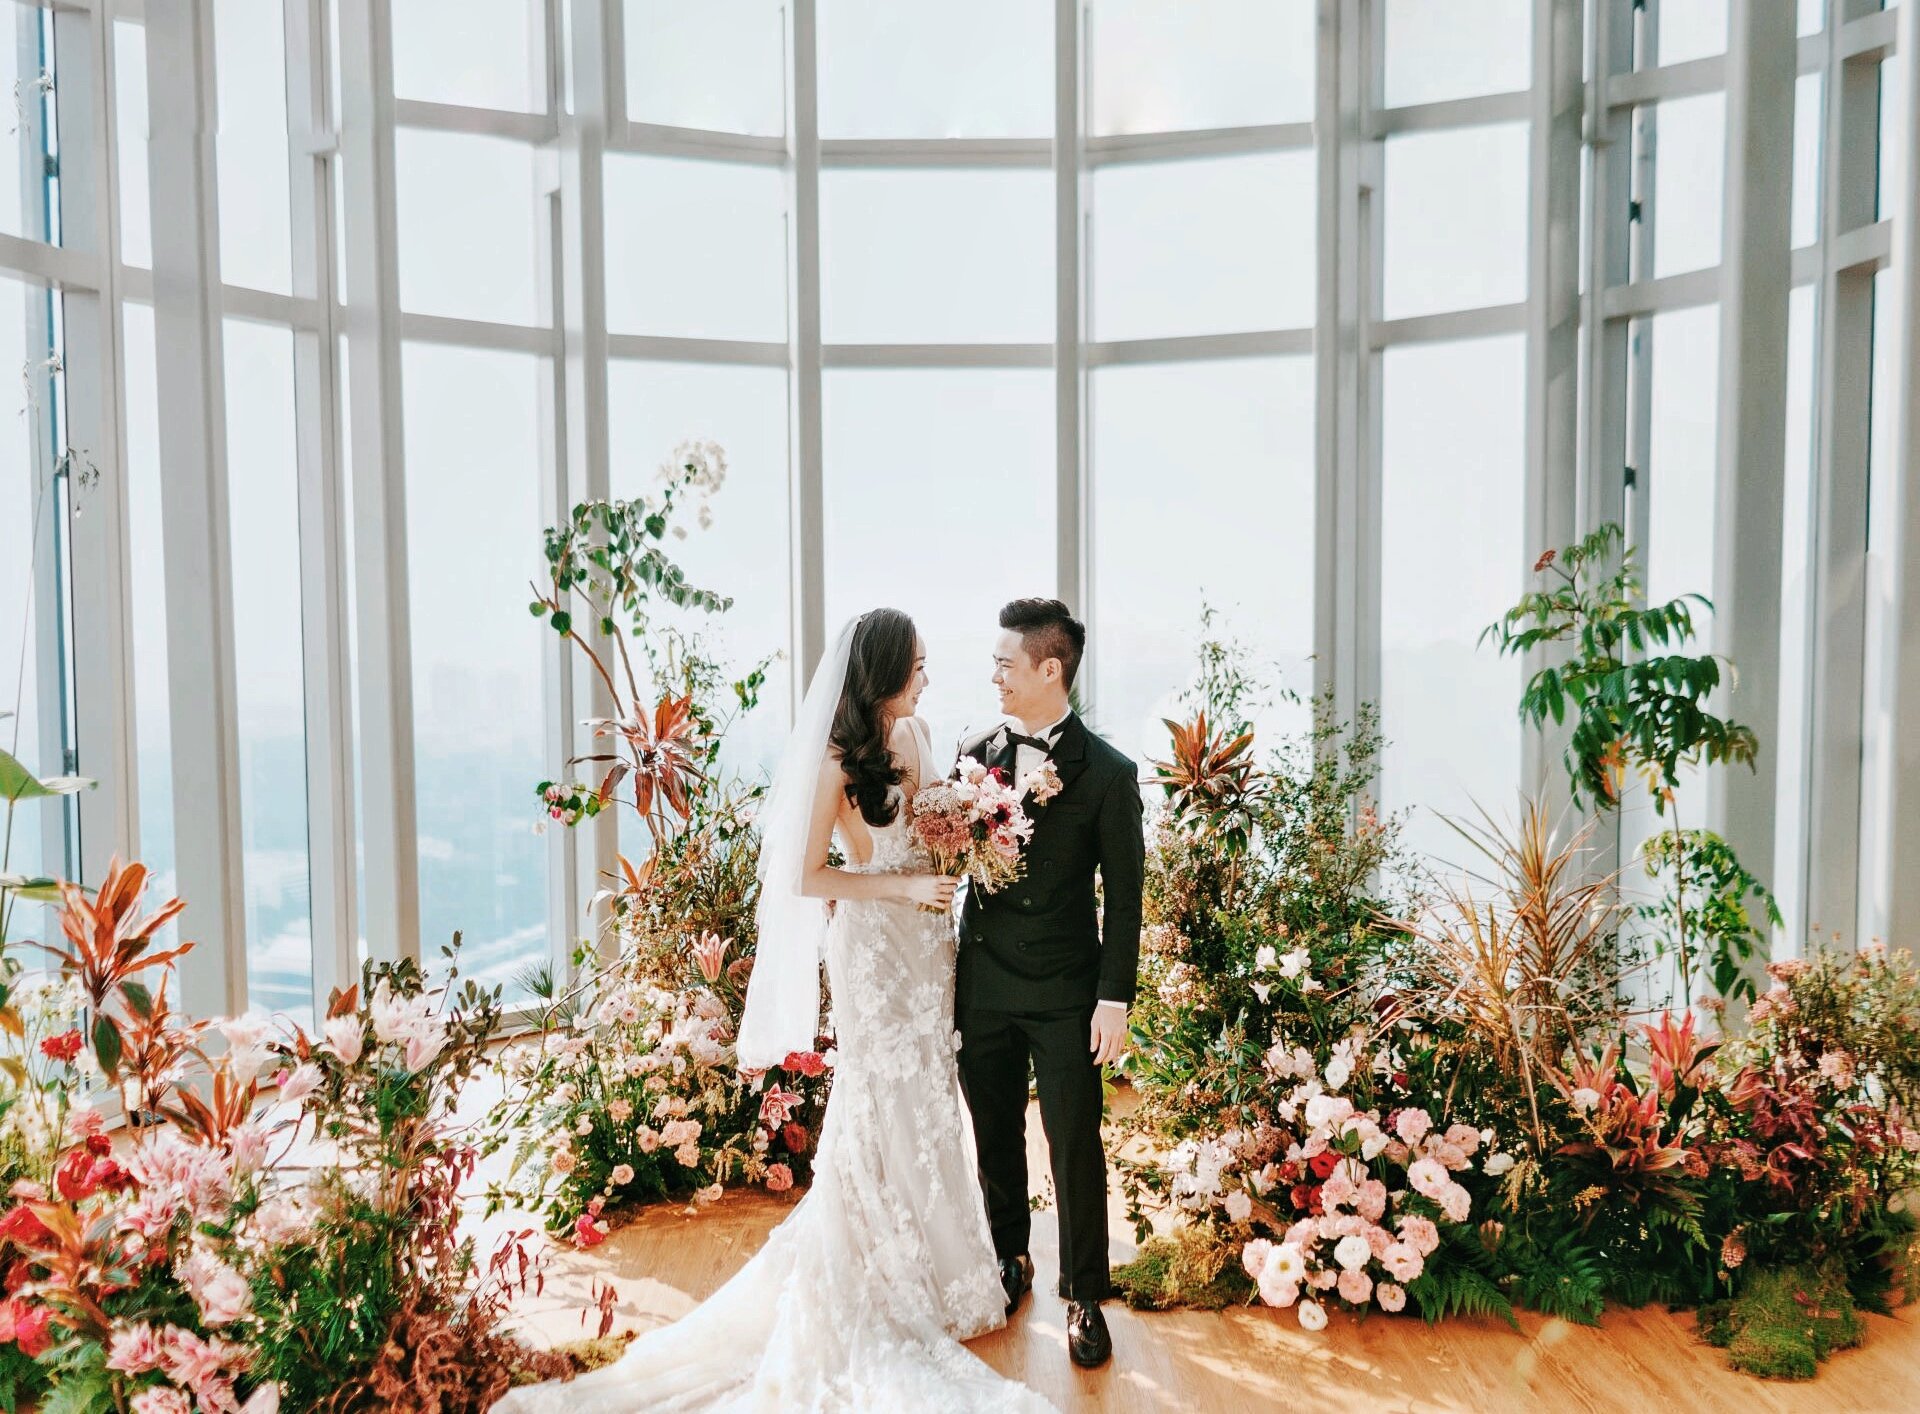 Skyline Dream Wedding Venue in Singapore - 1-Atico